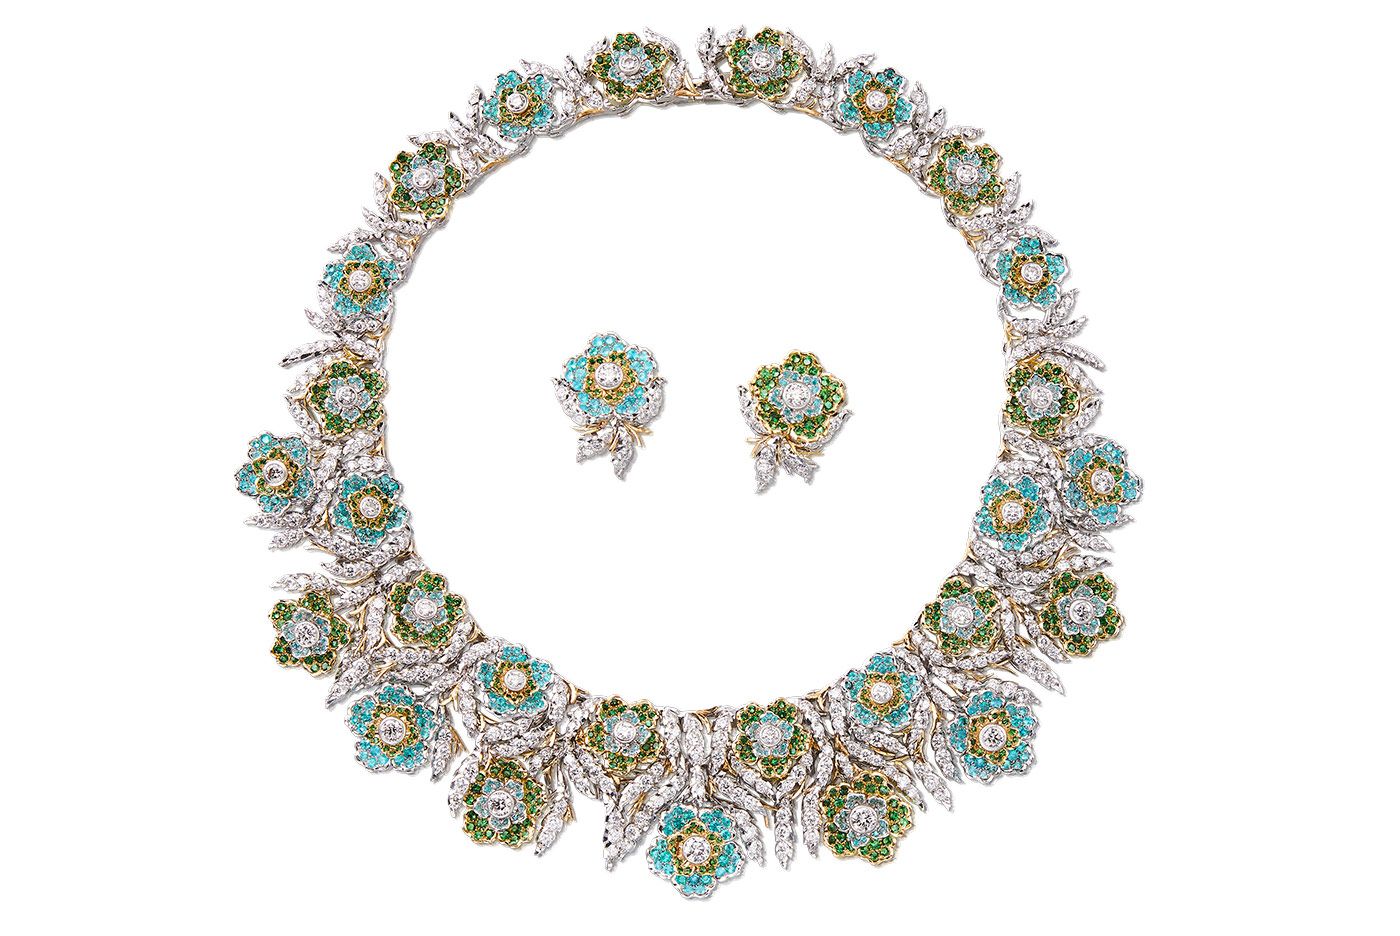 Buccellati Centaurea necklace and matching earrings with Paraiba tourmalines, tsavorite garnets and diamonds from the Il Giardino di Buccellati High Jewellery collection